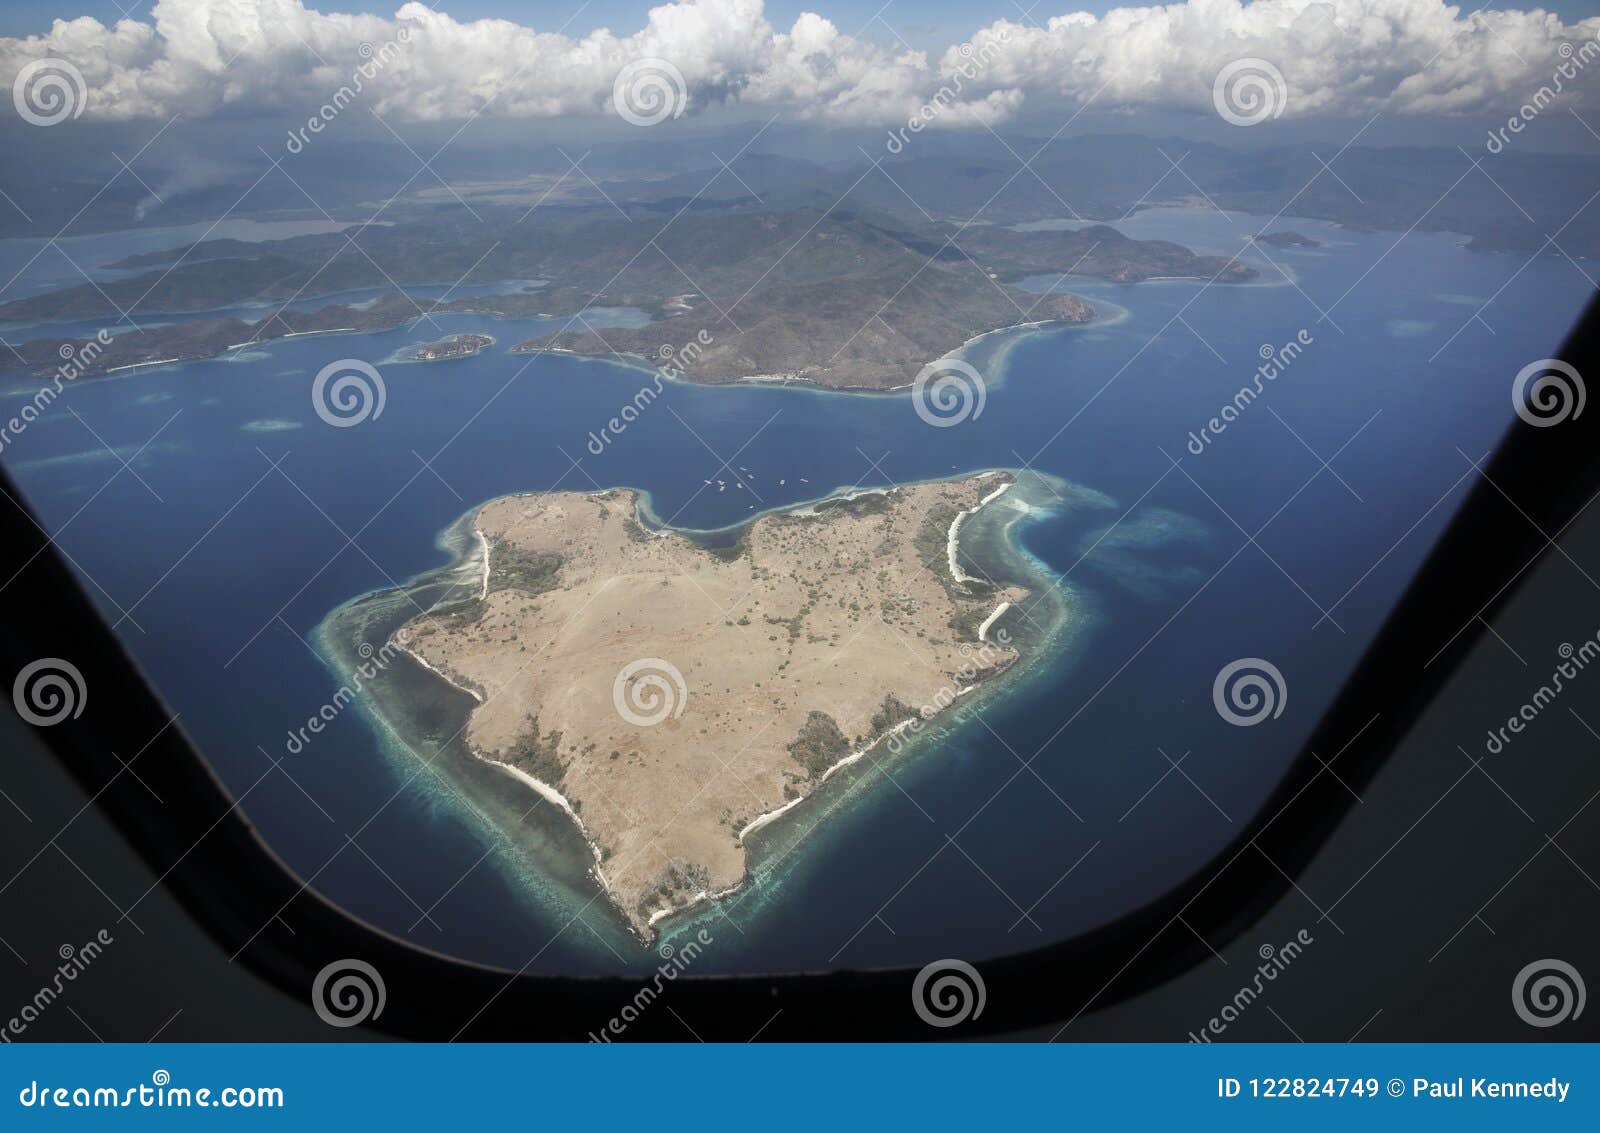 heart d island viewed from plane in nusa tenggara, indonesia